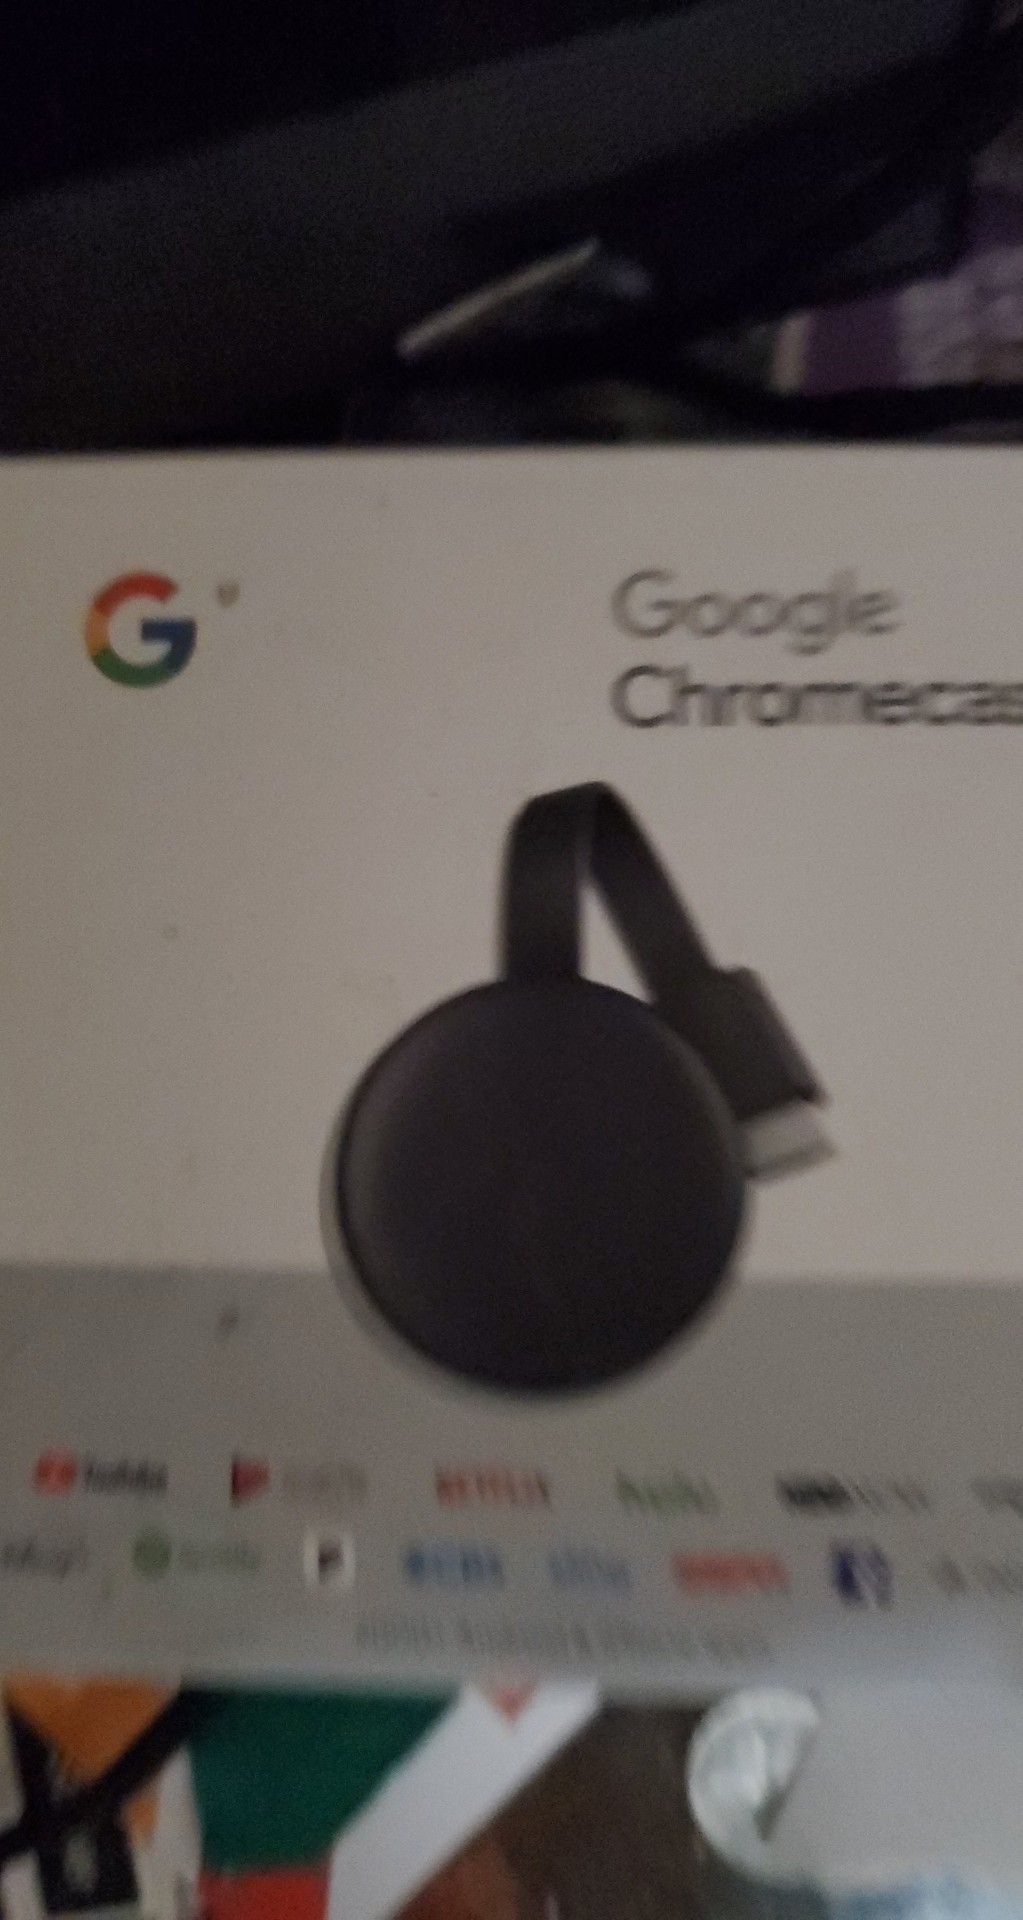 Google chromecast new